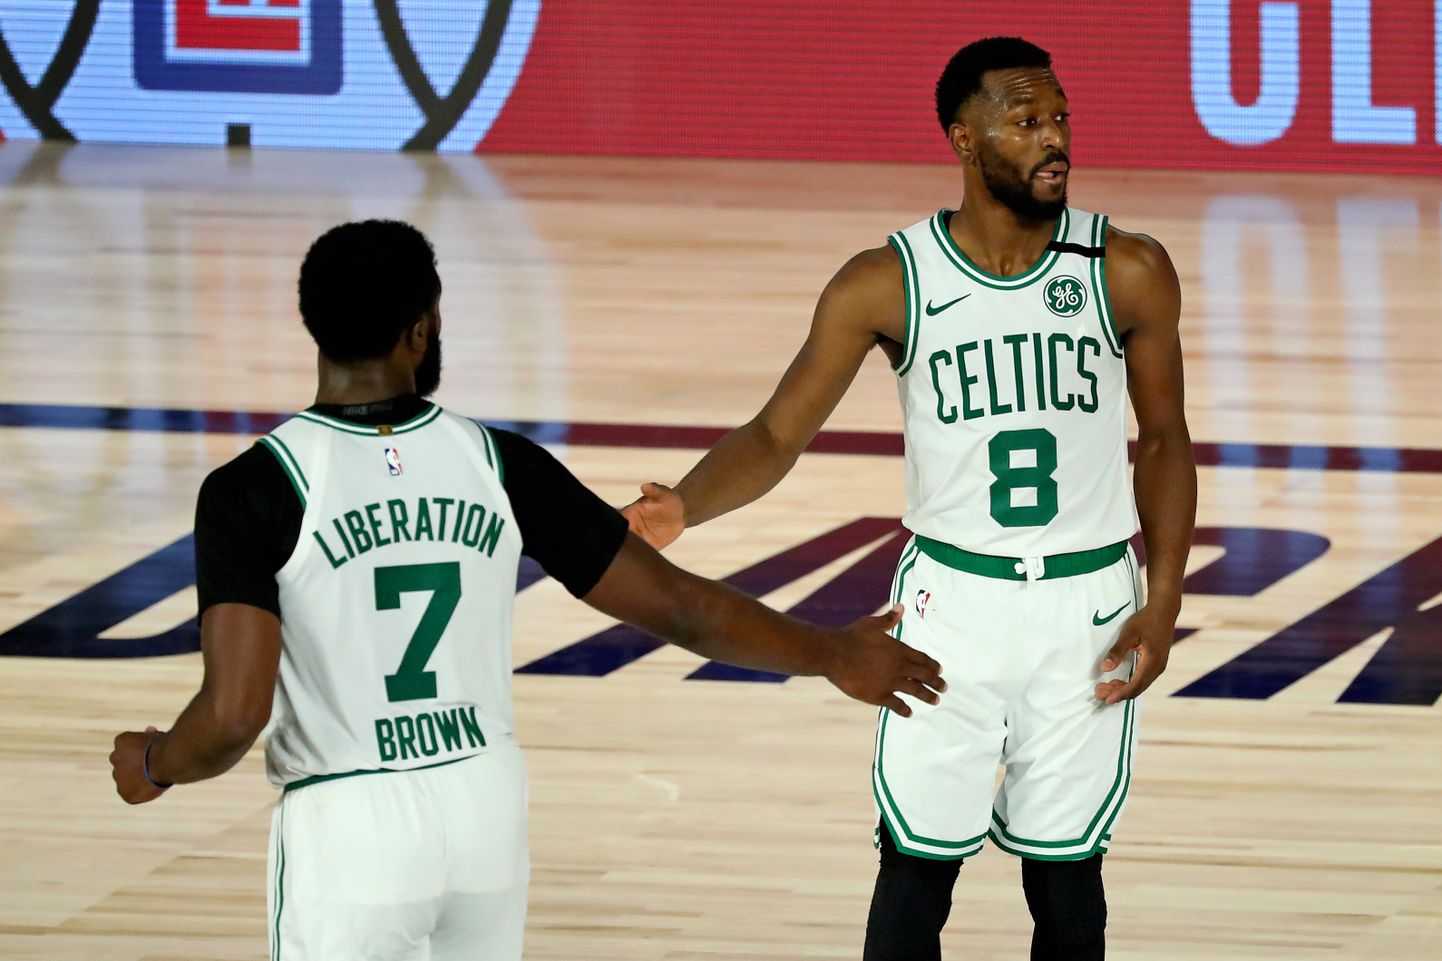 Bostonas "Celtics" basketbolisti.